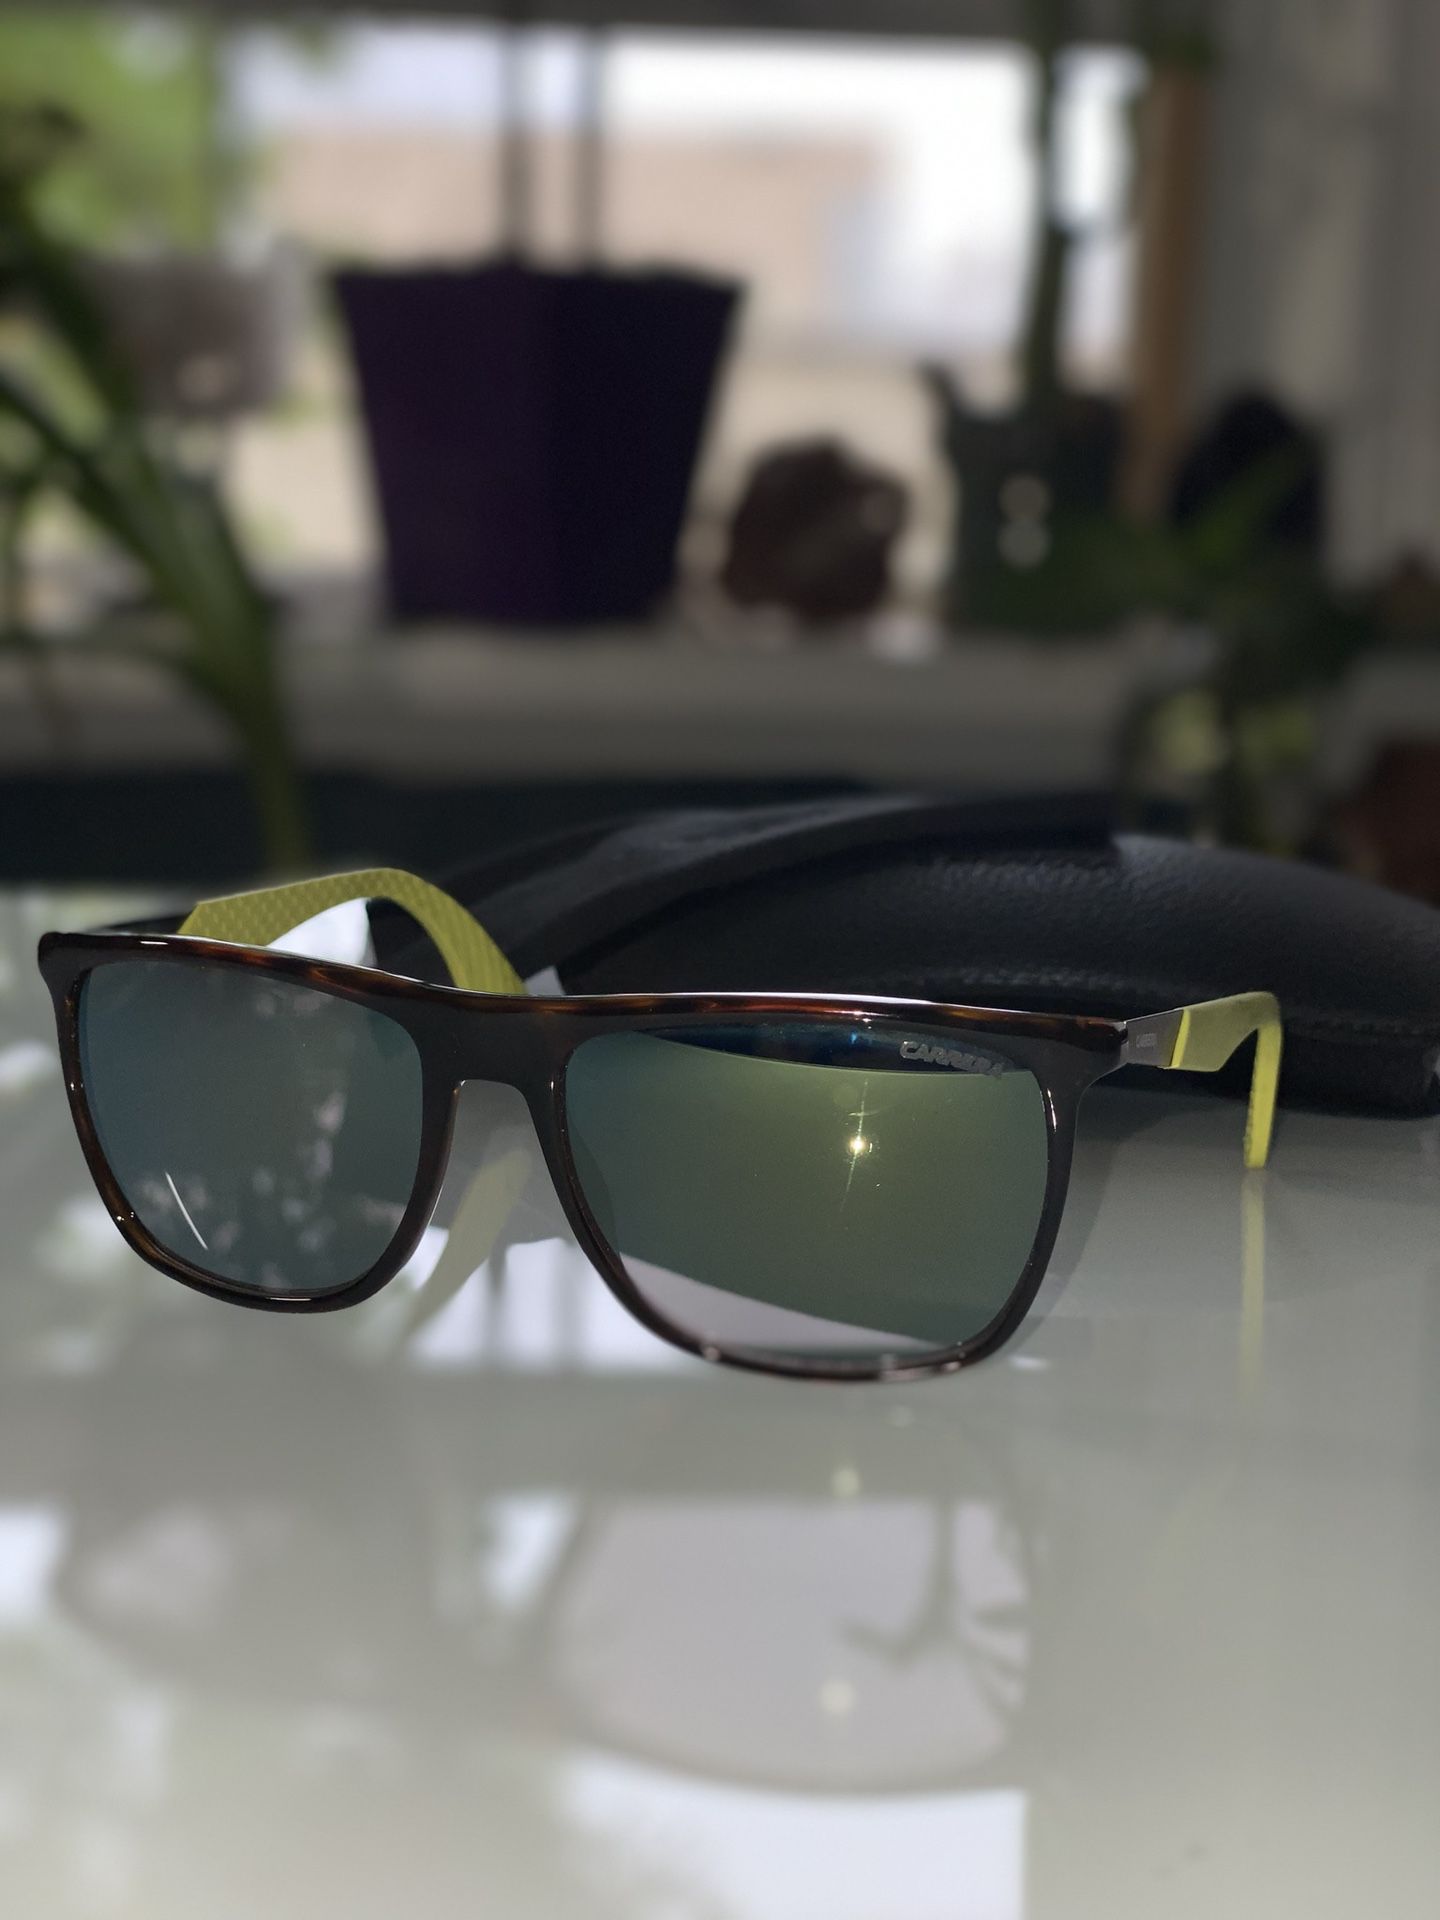 Carrera sunglasses shades beach